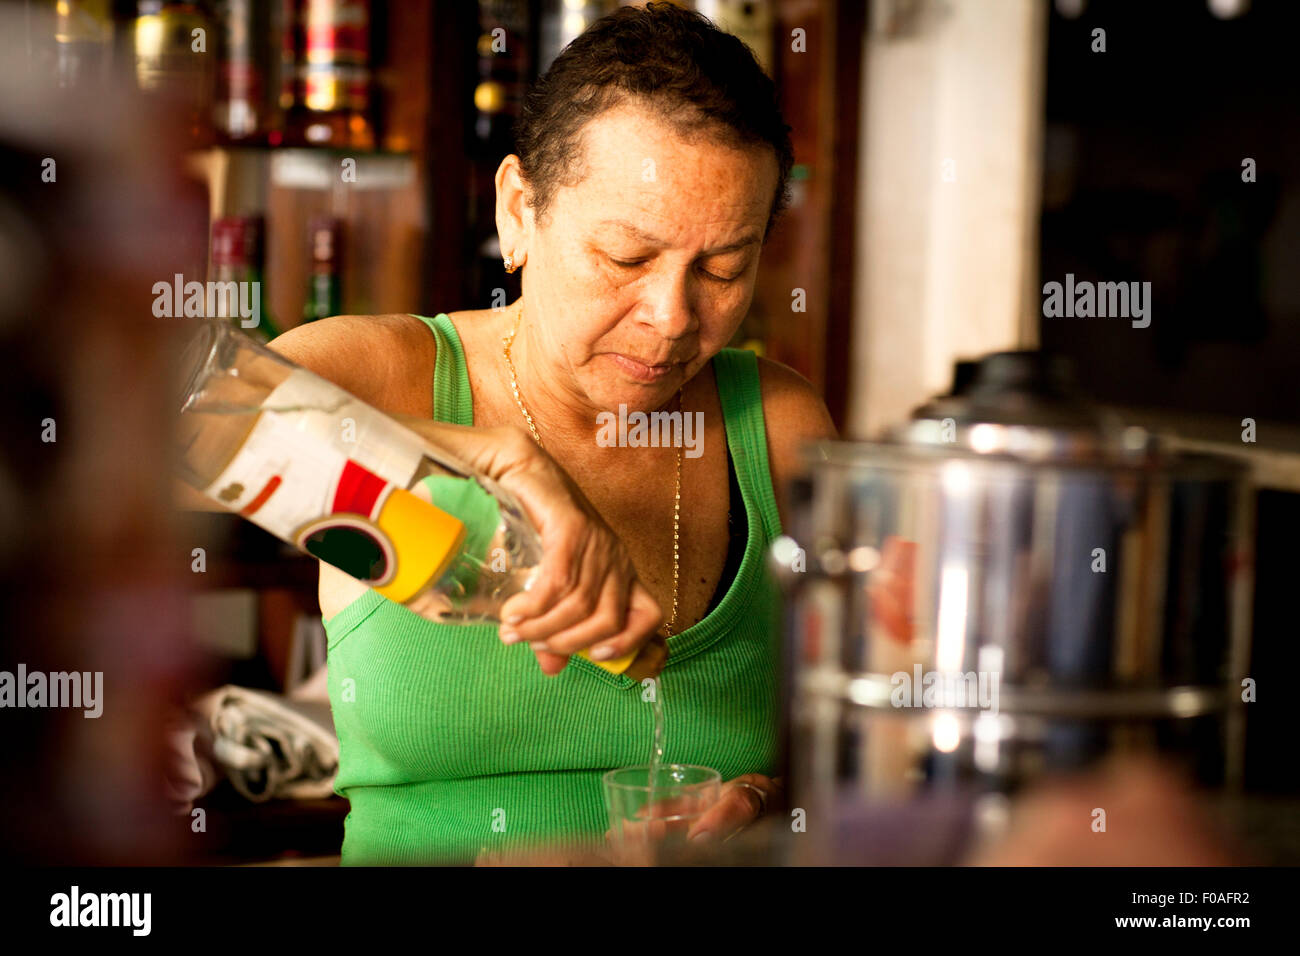 Woman serving liquor in bar Stock Photo